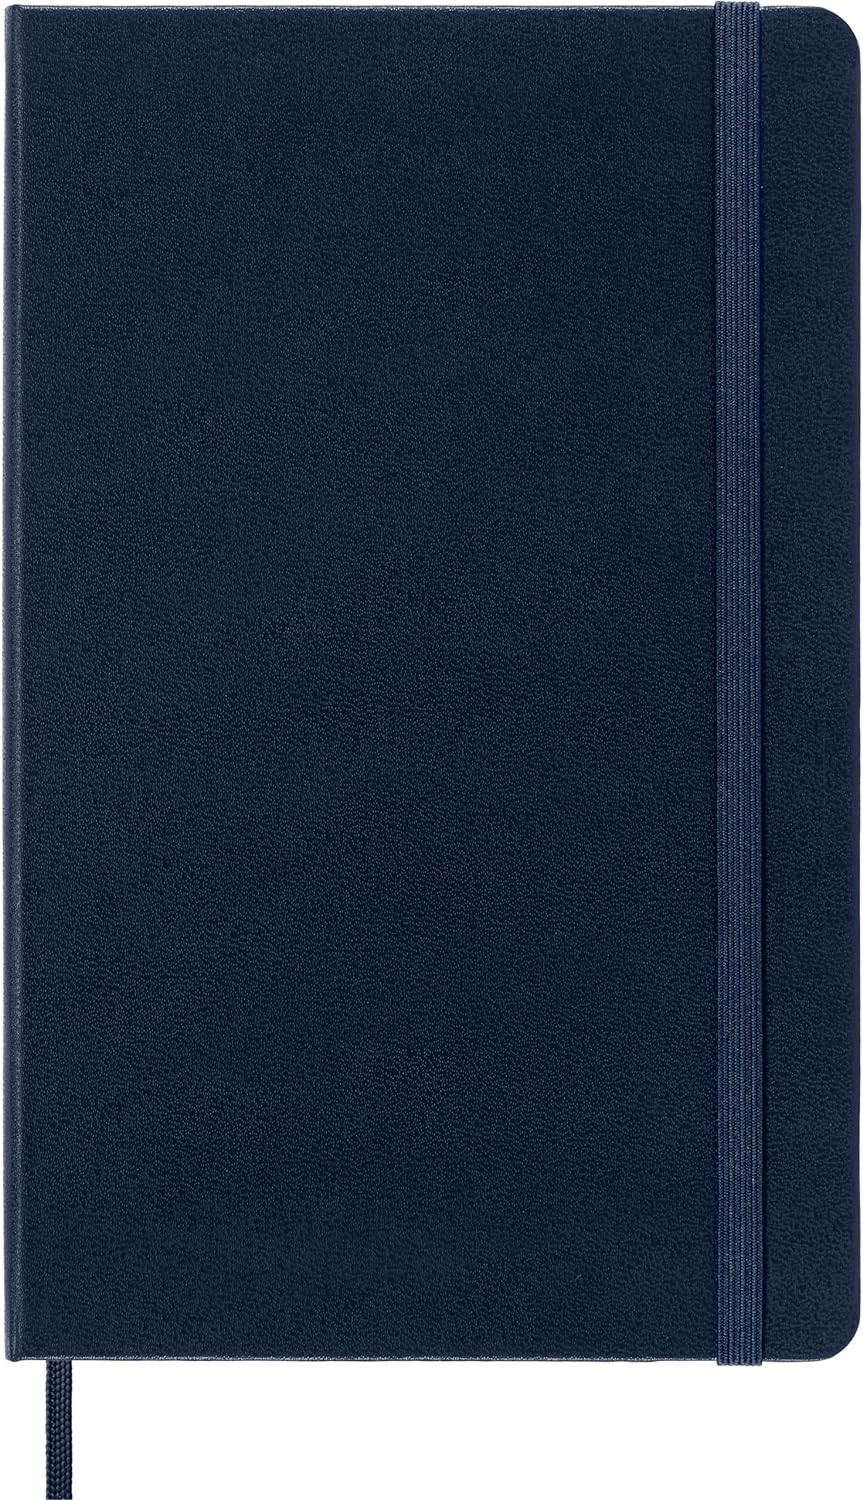 moleskine-plain-soft-cover-large-notebook-sapphire-blue